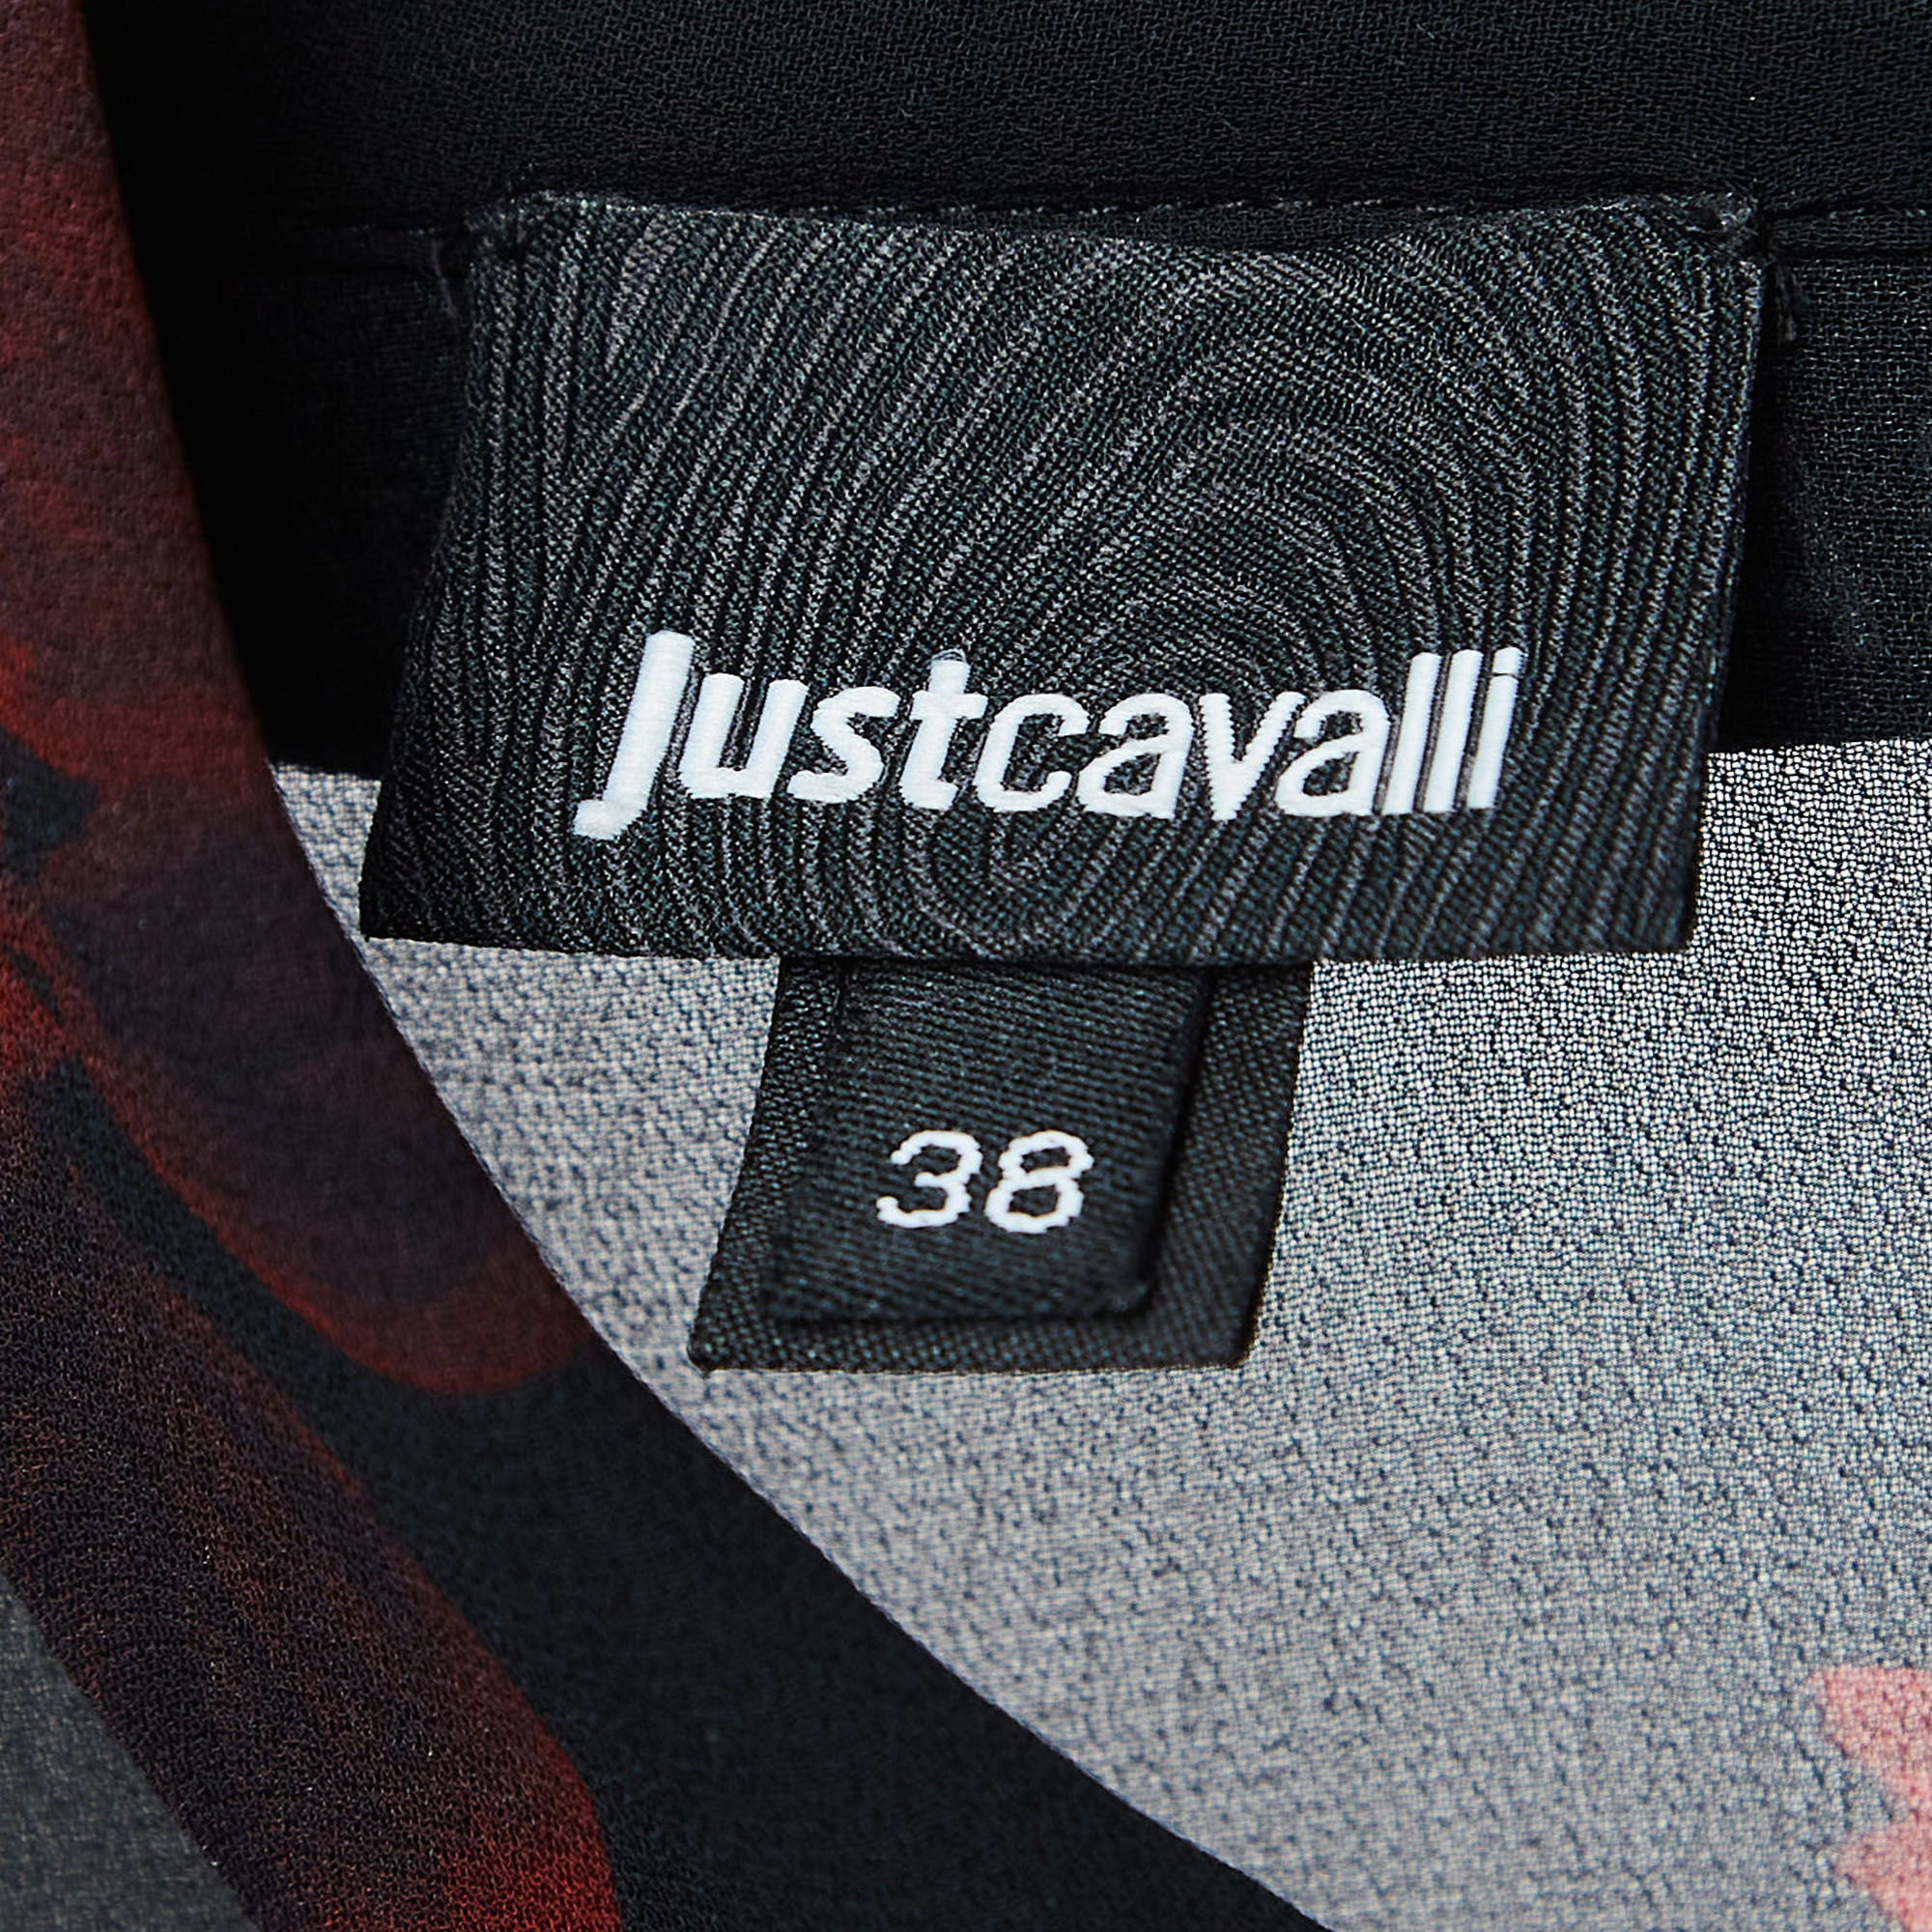 Just Cavalli Black Floral Print Georgette Button Front Shirt S